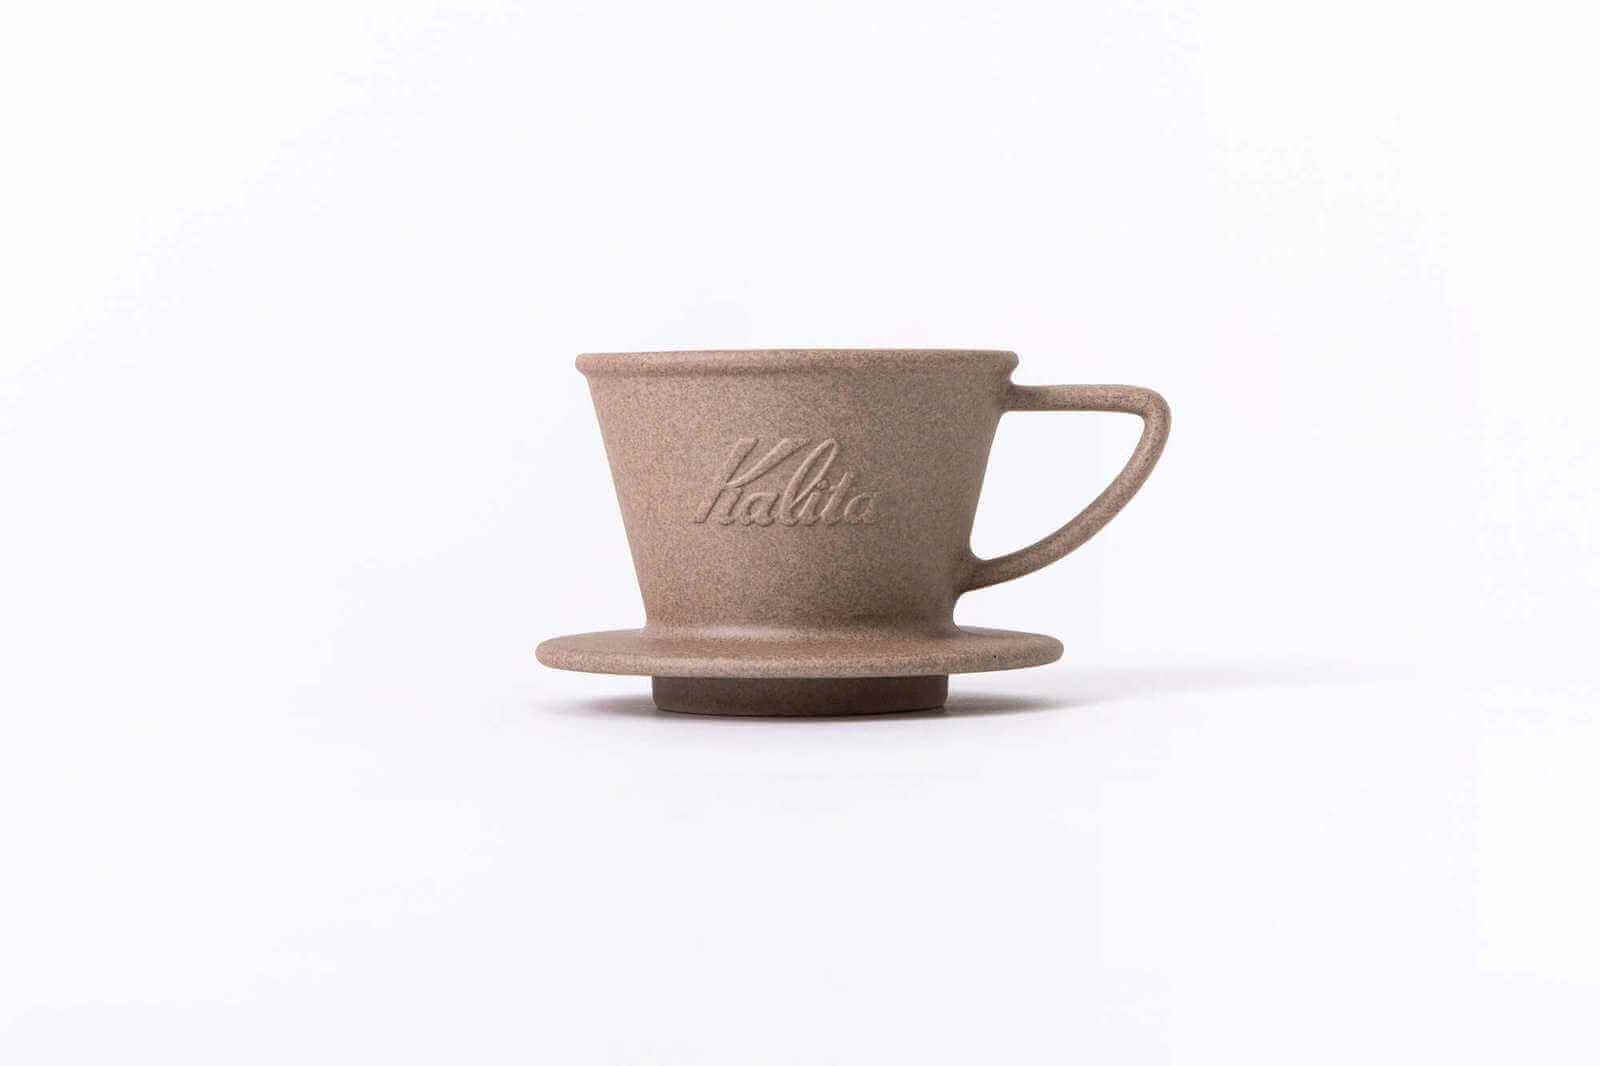 【日本】Kalita SG-155系列 砂岩陶土波佐見燒濾杯 - Quality Life Coffee